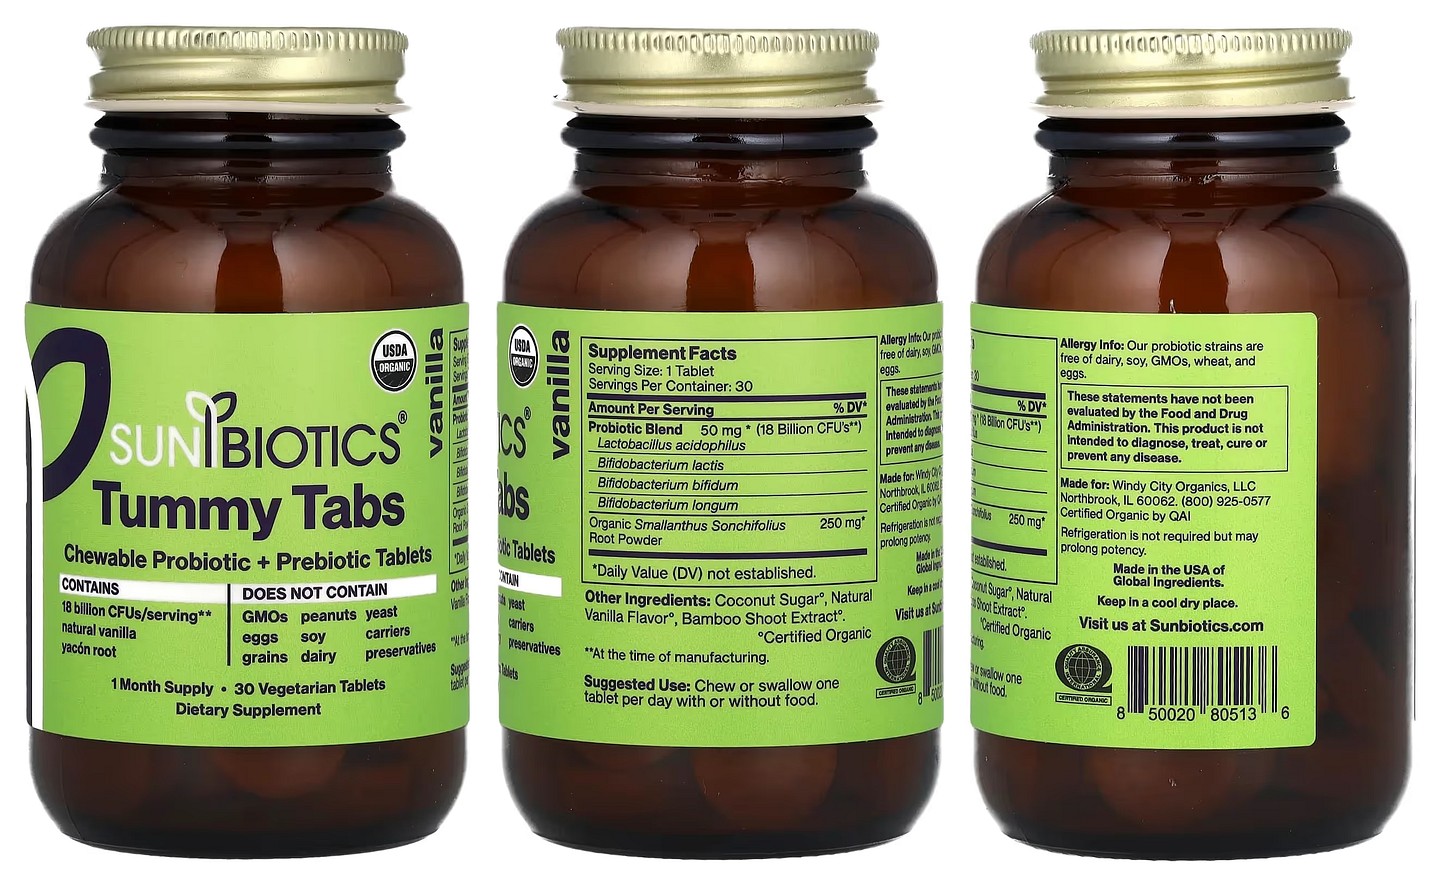 Sunbiotics, Tummy Tabs packaging